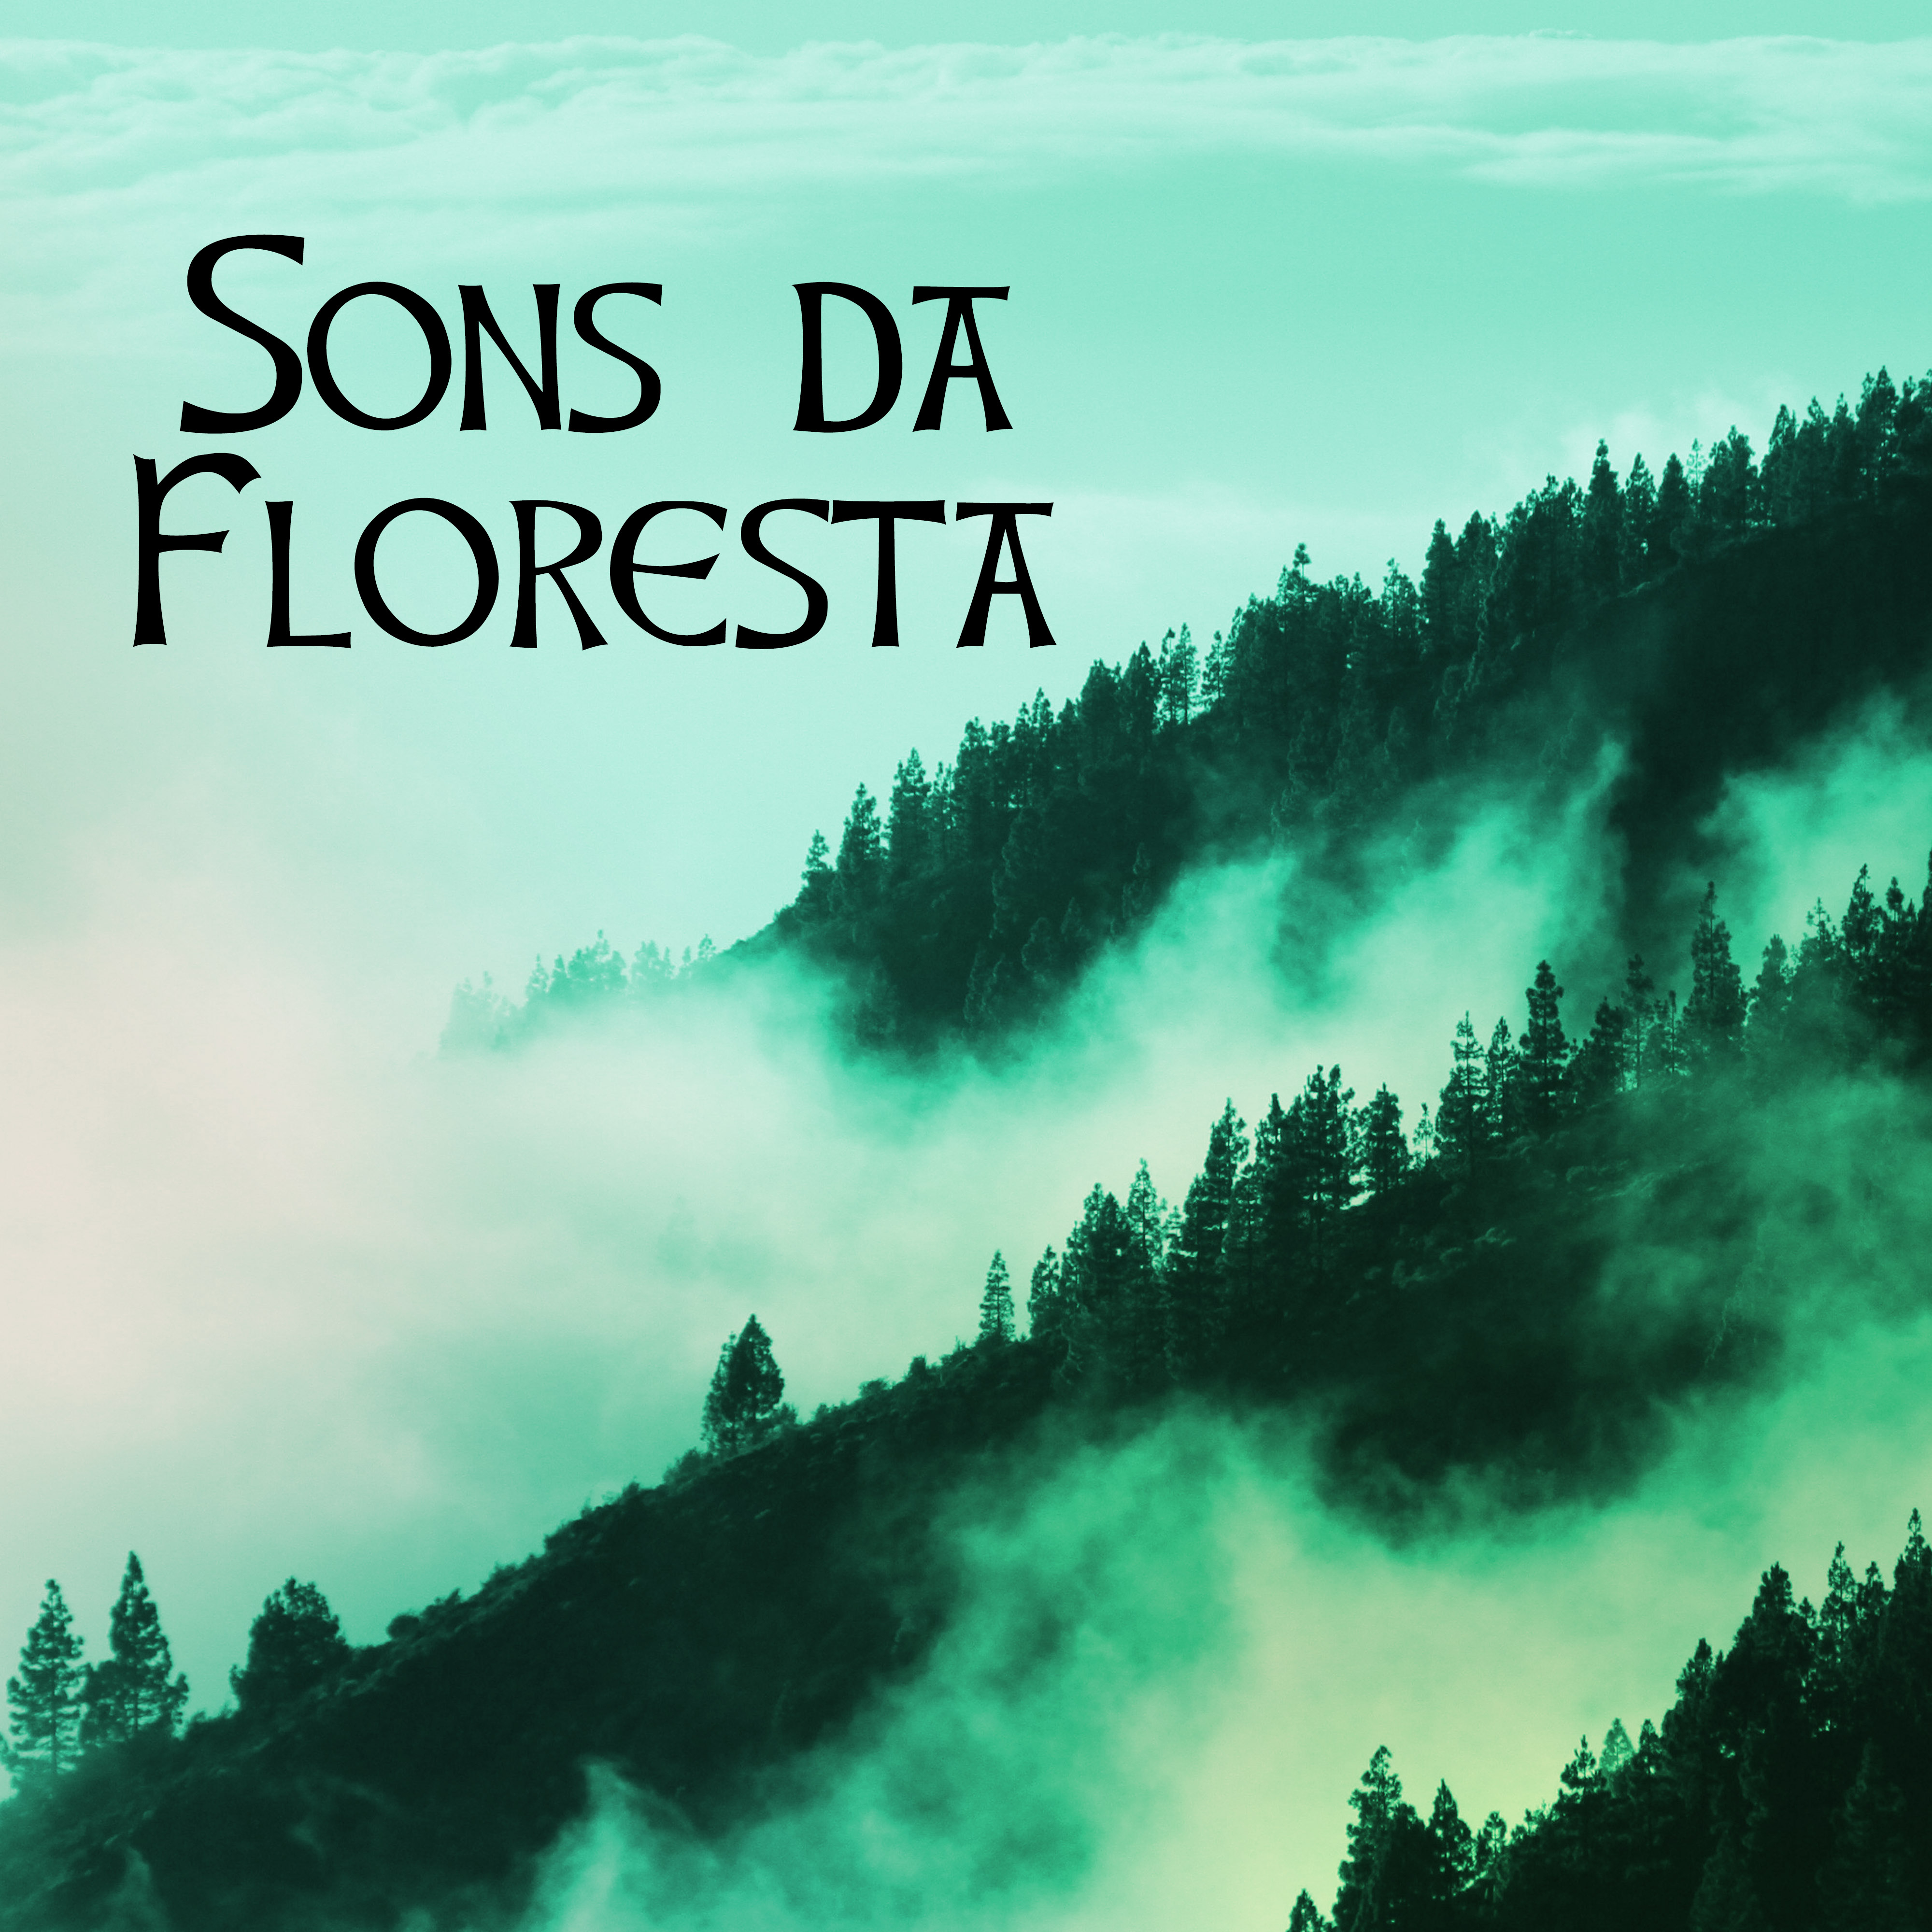 Sons da Floresta - Sons de Passaros, Musicas de Fundo para Relaxamento e Serenidade